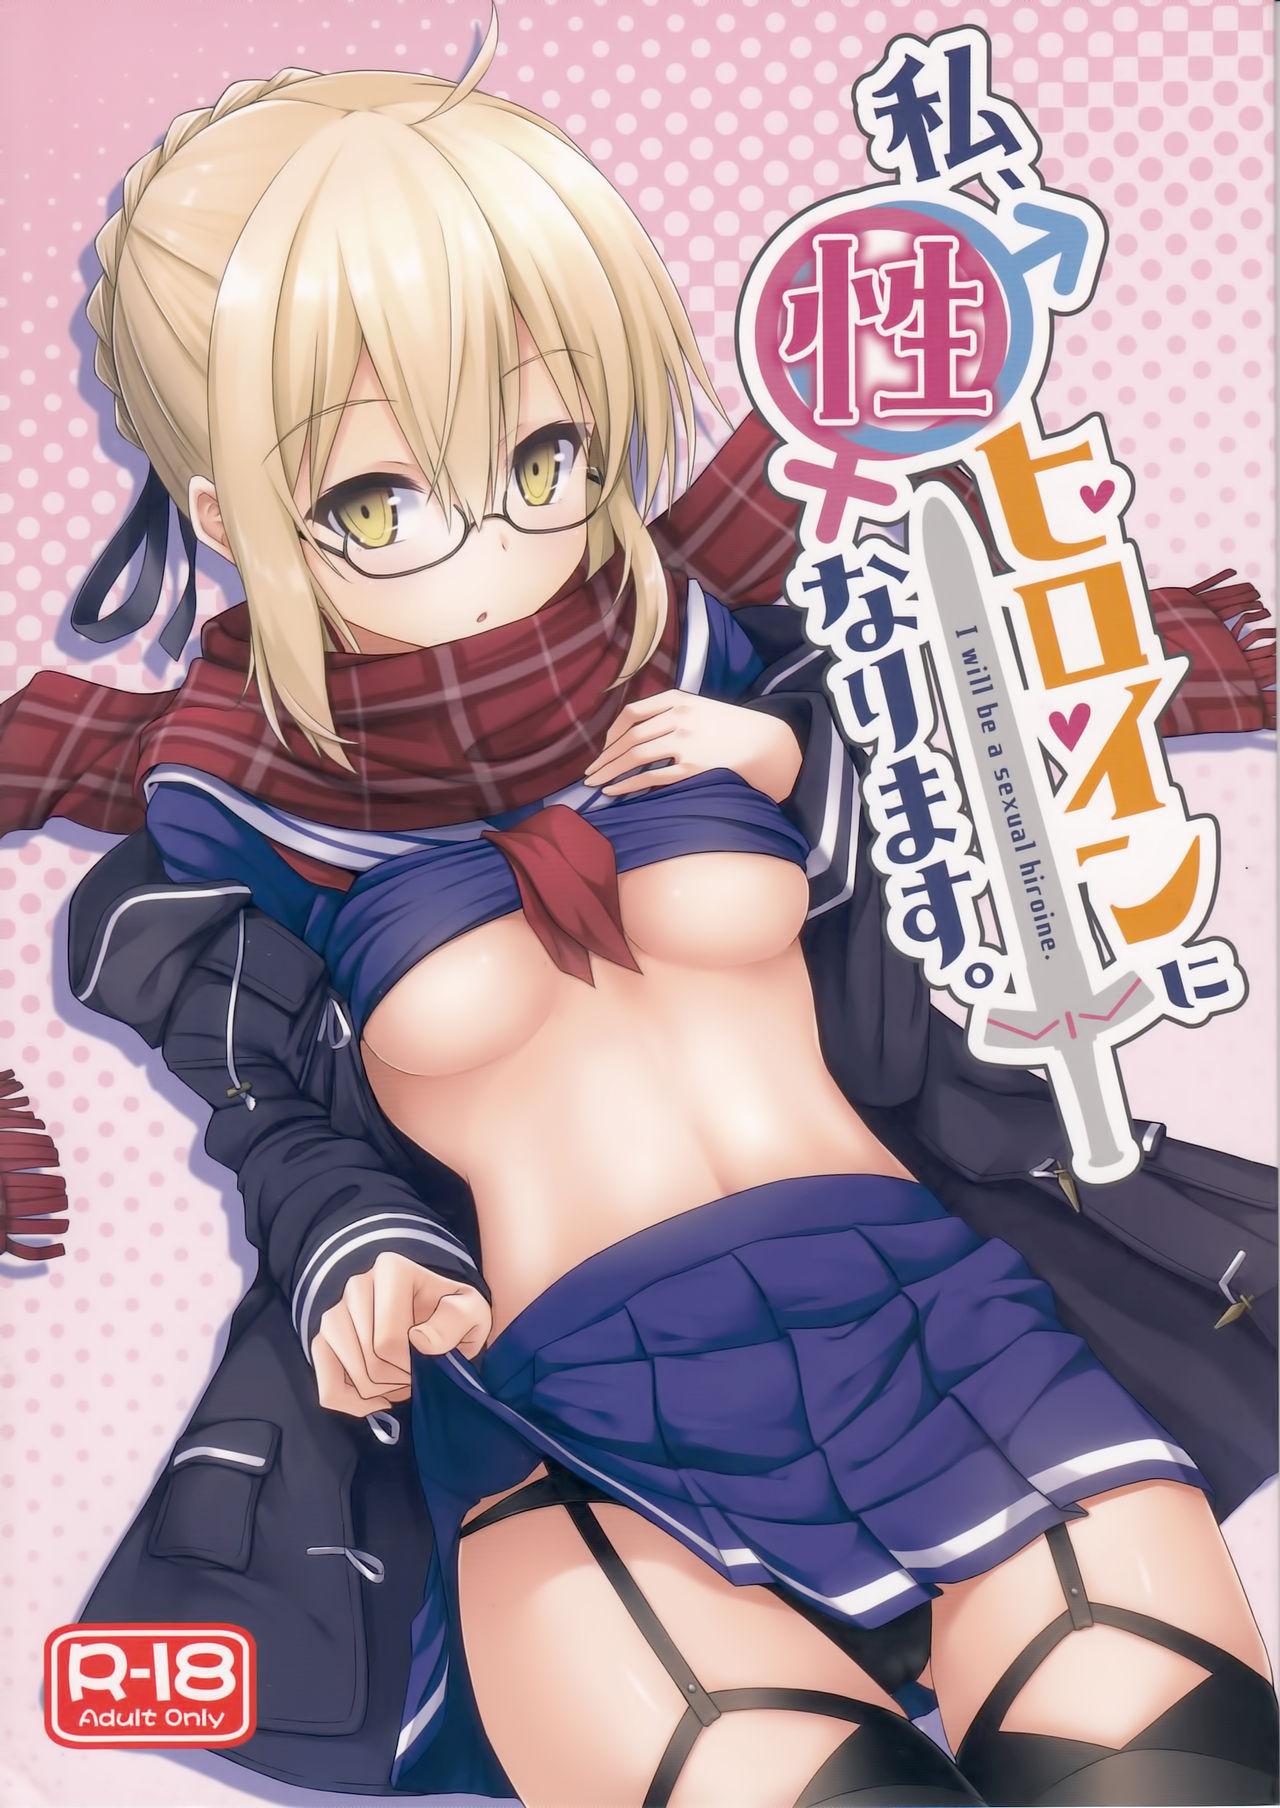 Oral Watashi, Sei Heroine ni Narimasu. - I will be a sexual hiroine. - Fate grand order Virgin - Picture 1